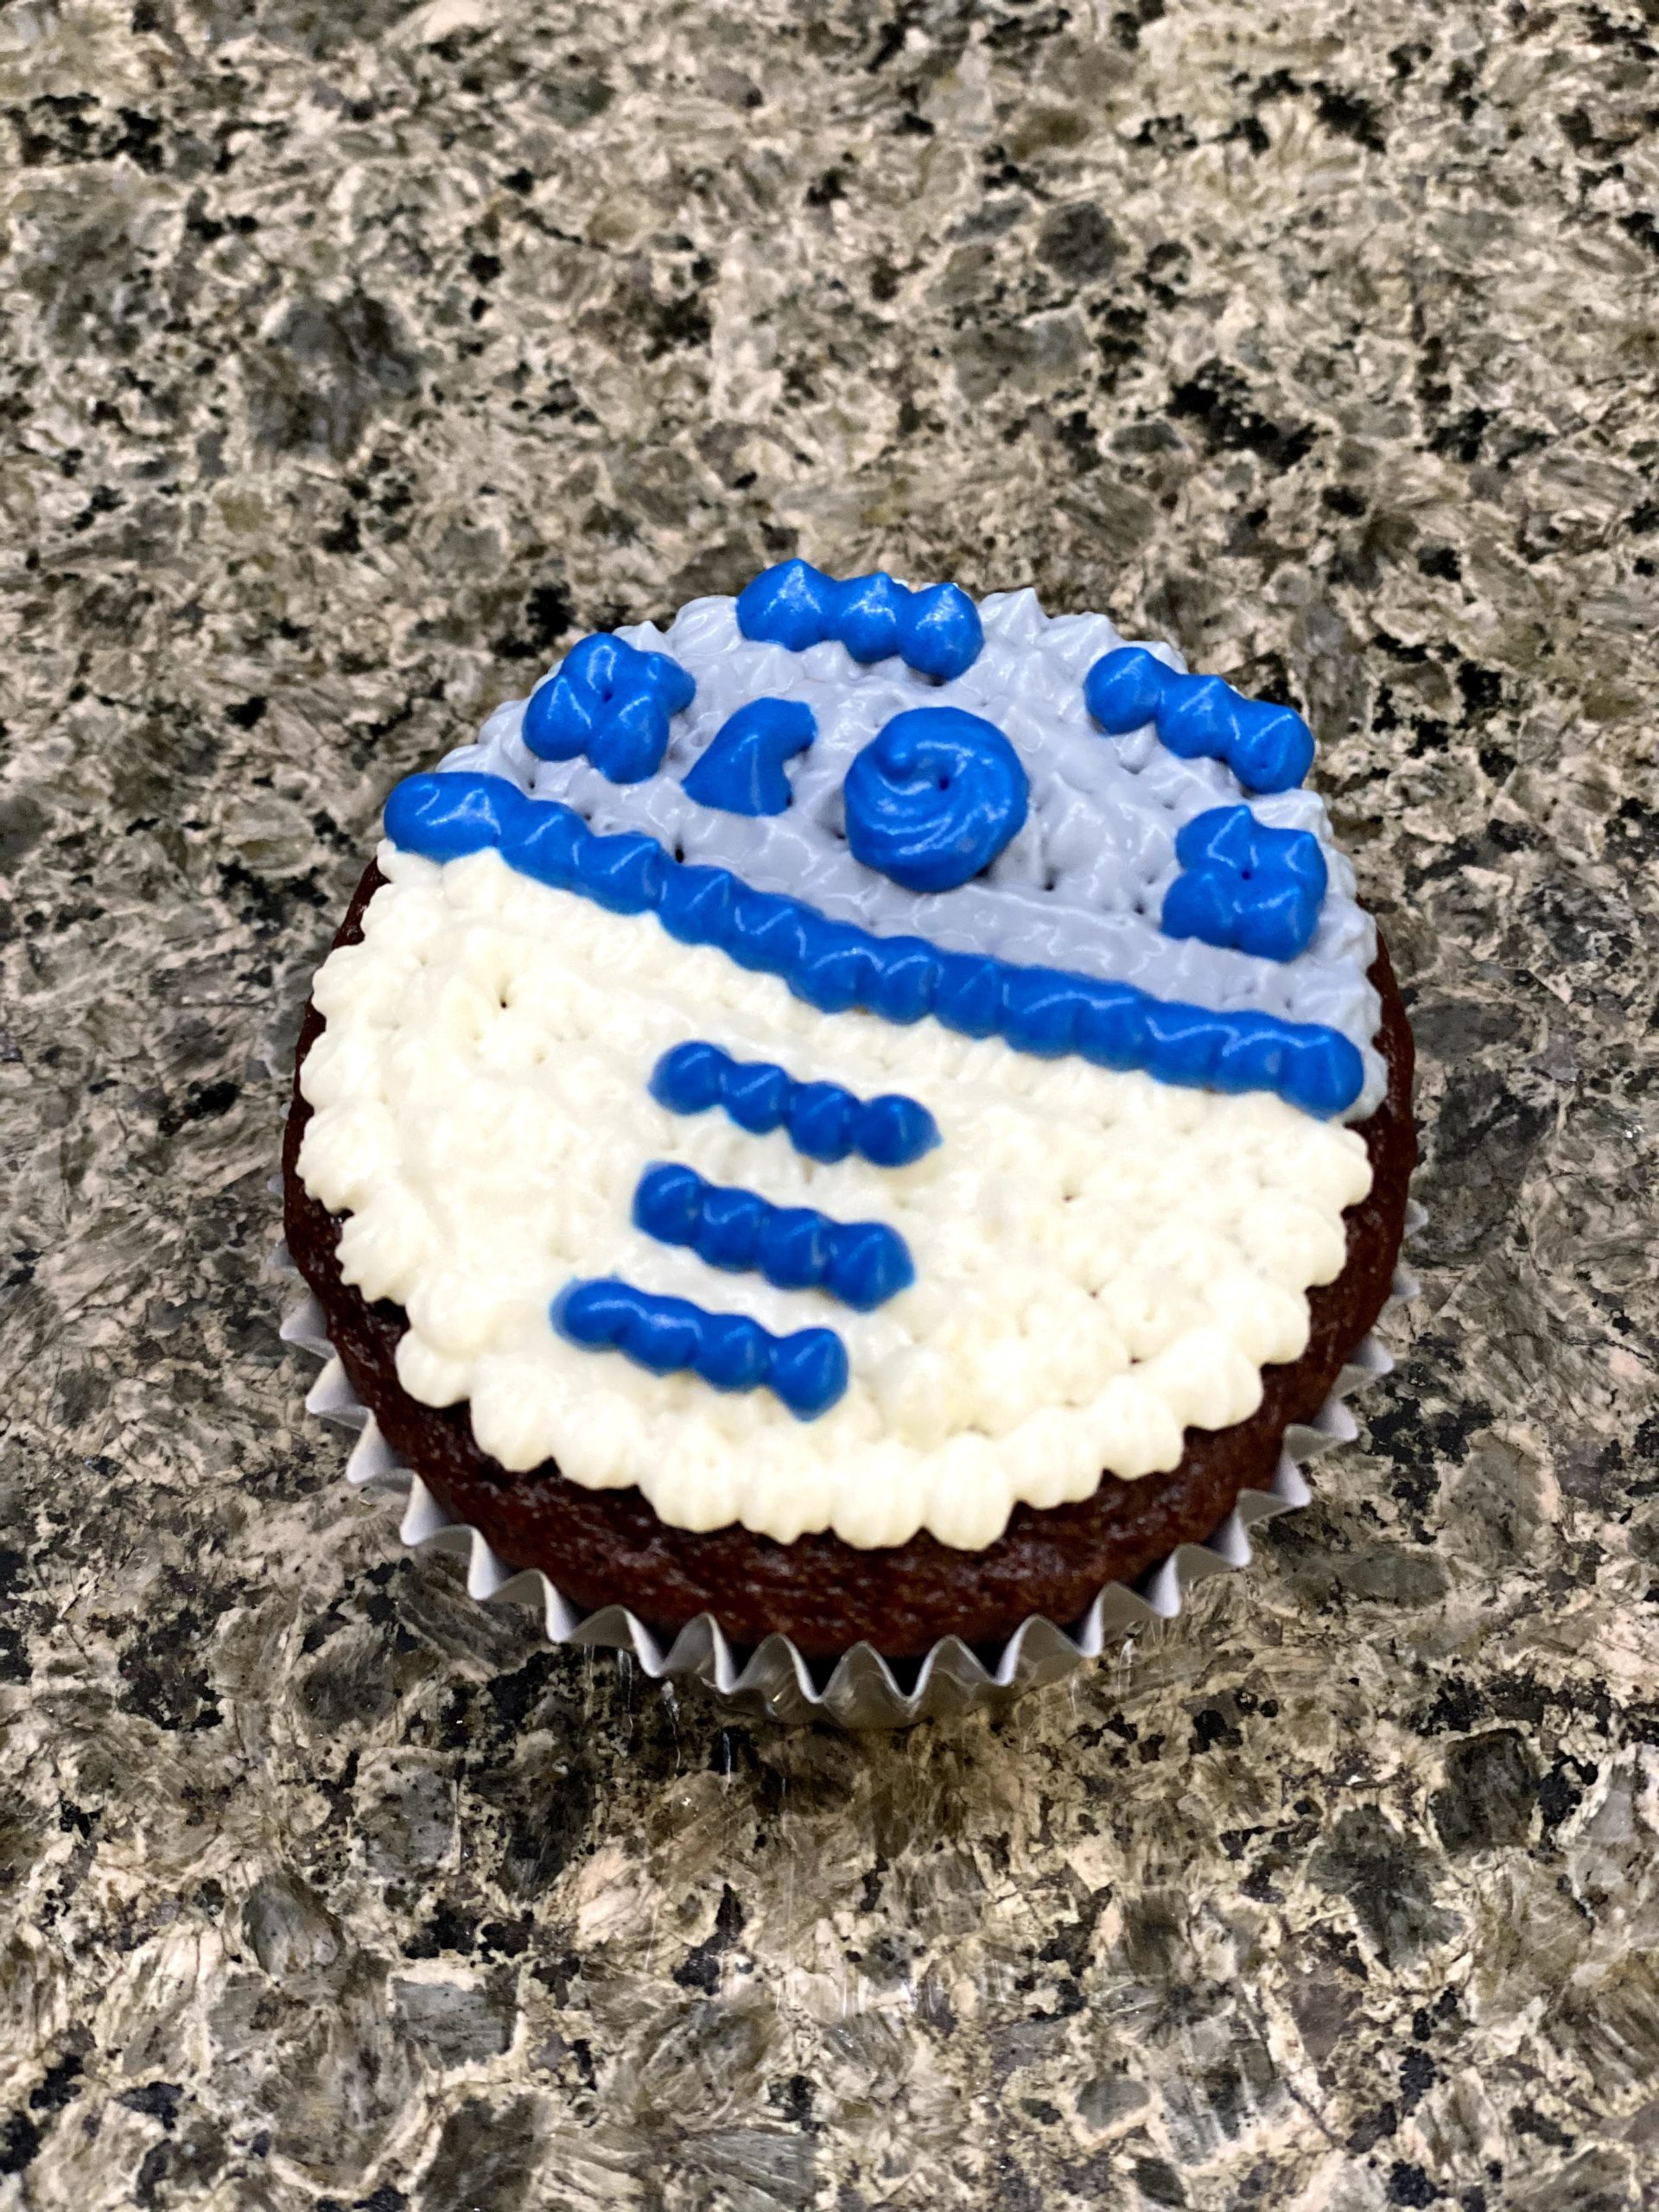 r2d2 cupcake